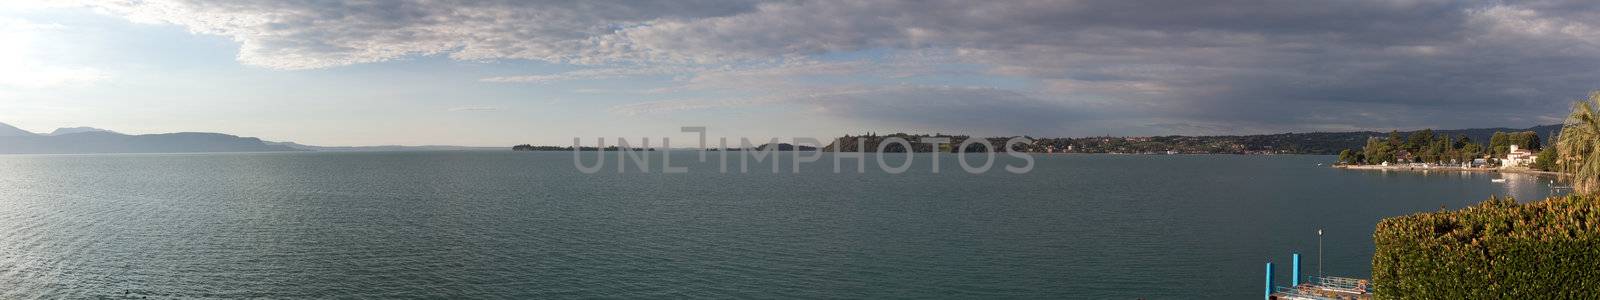 Panorama over Lake Garda by steheap